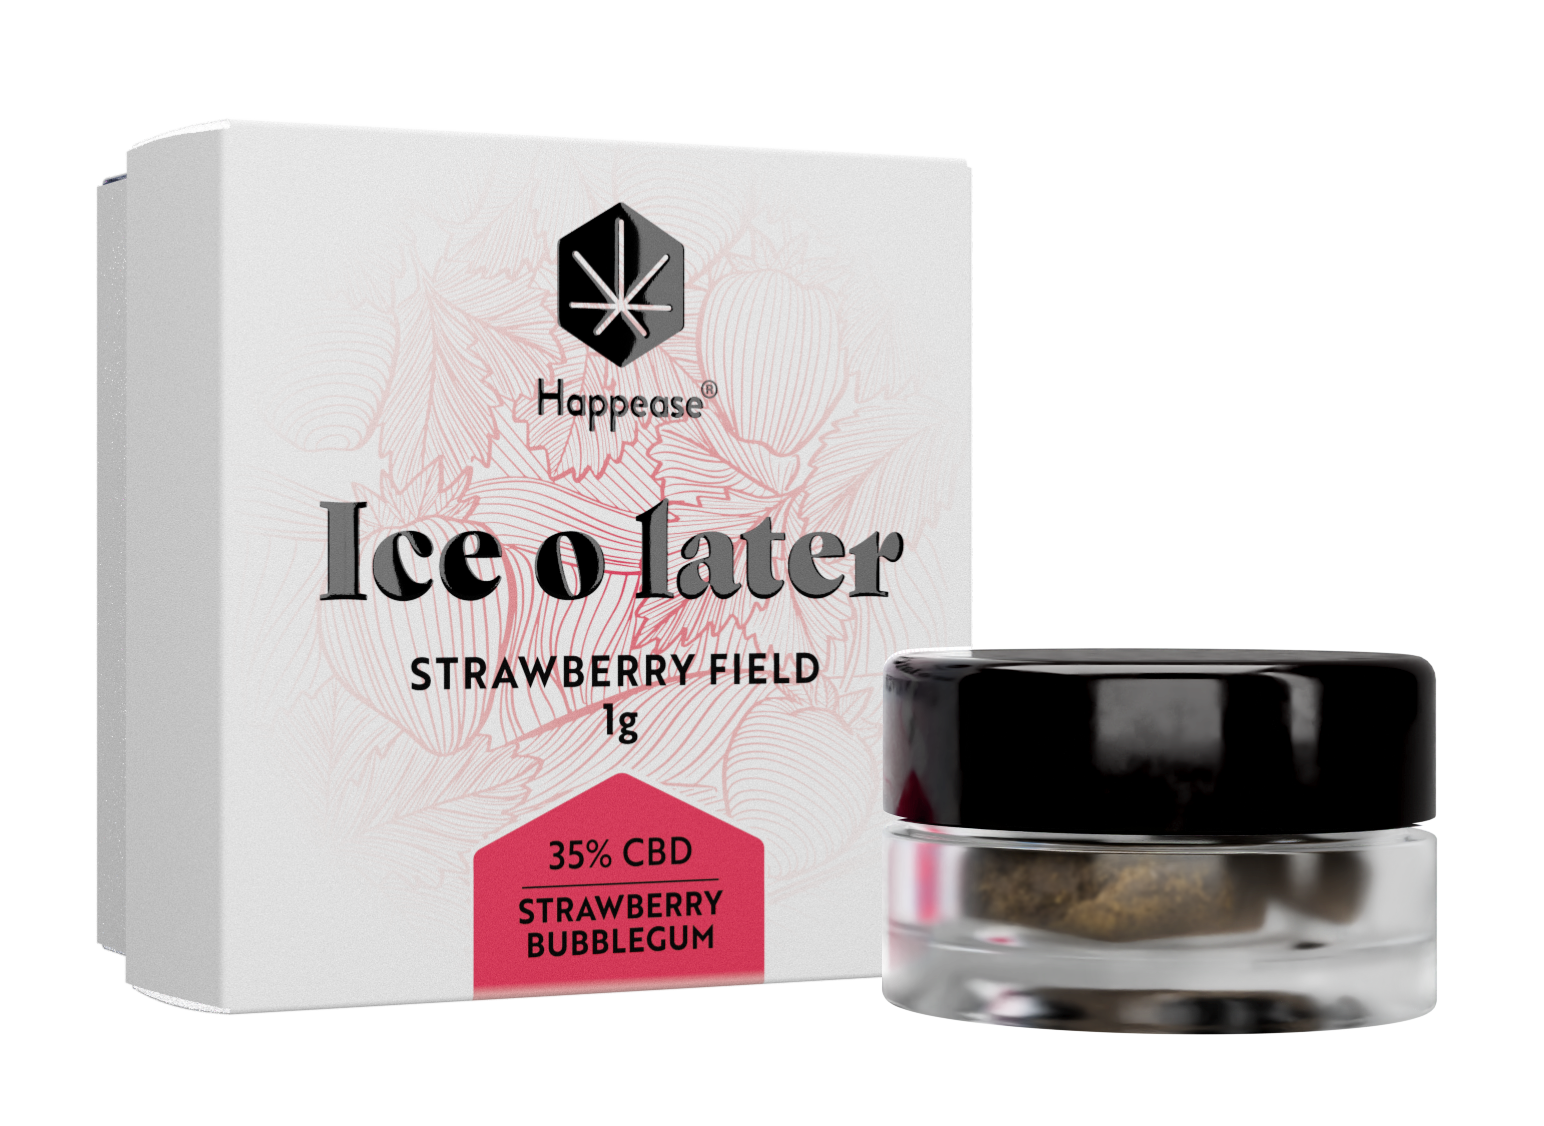 Ice o later Strawberry Field - Hash CBD